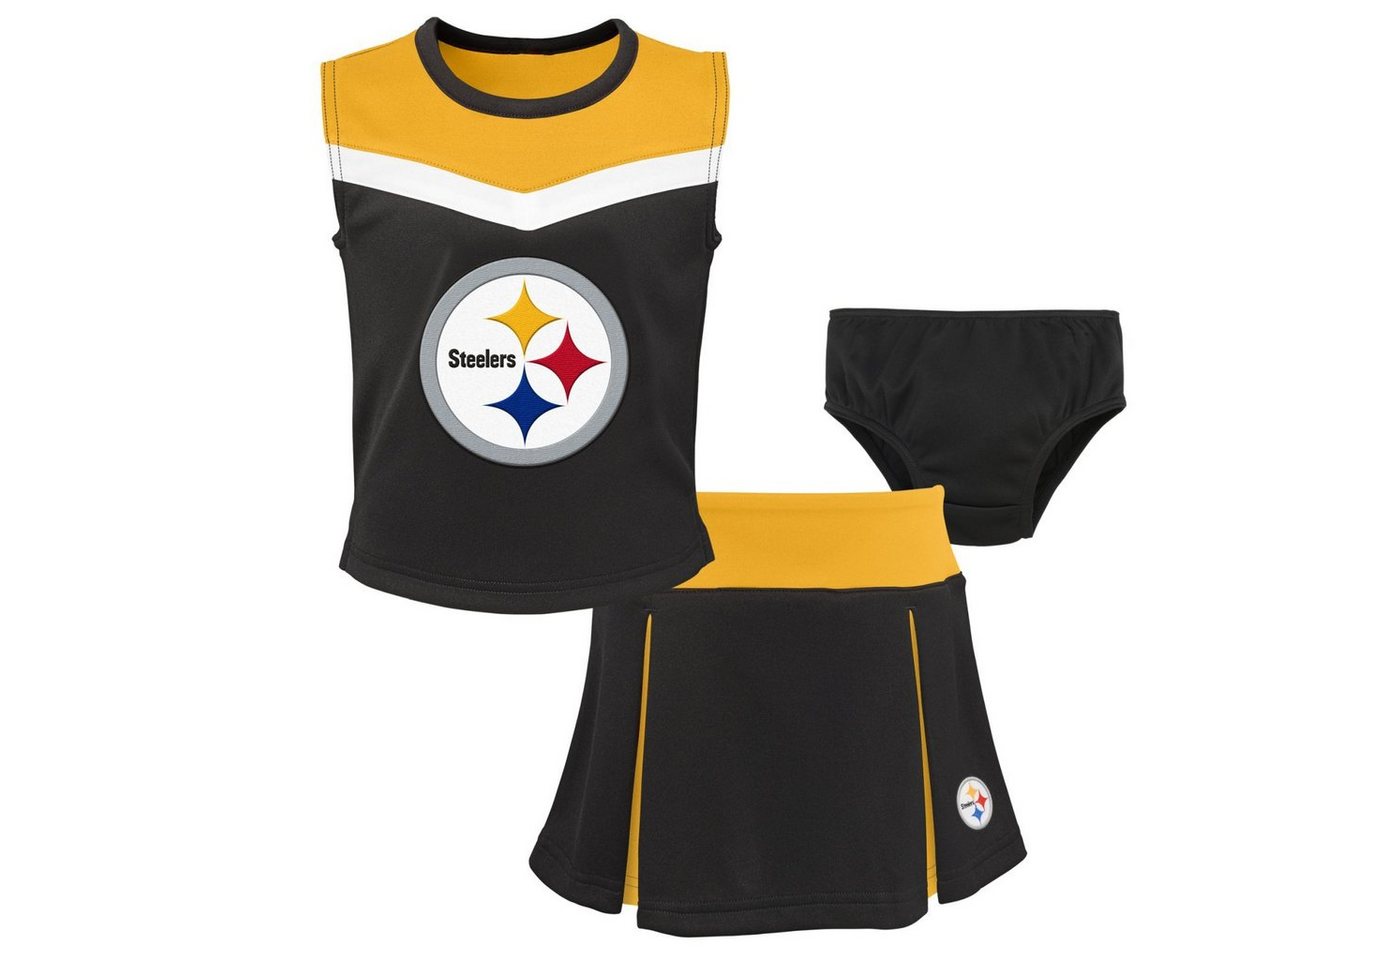 Outerstuff Print-Shirt NFL Cheerleader Set Pittsburgh Steelers von Outerstuff